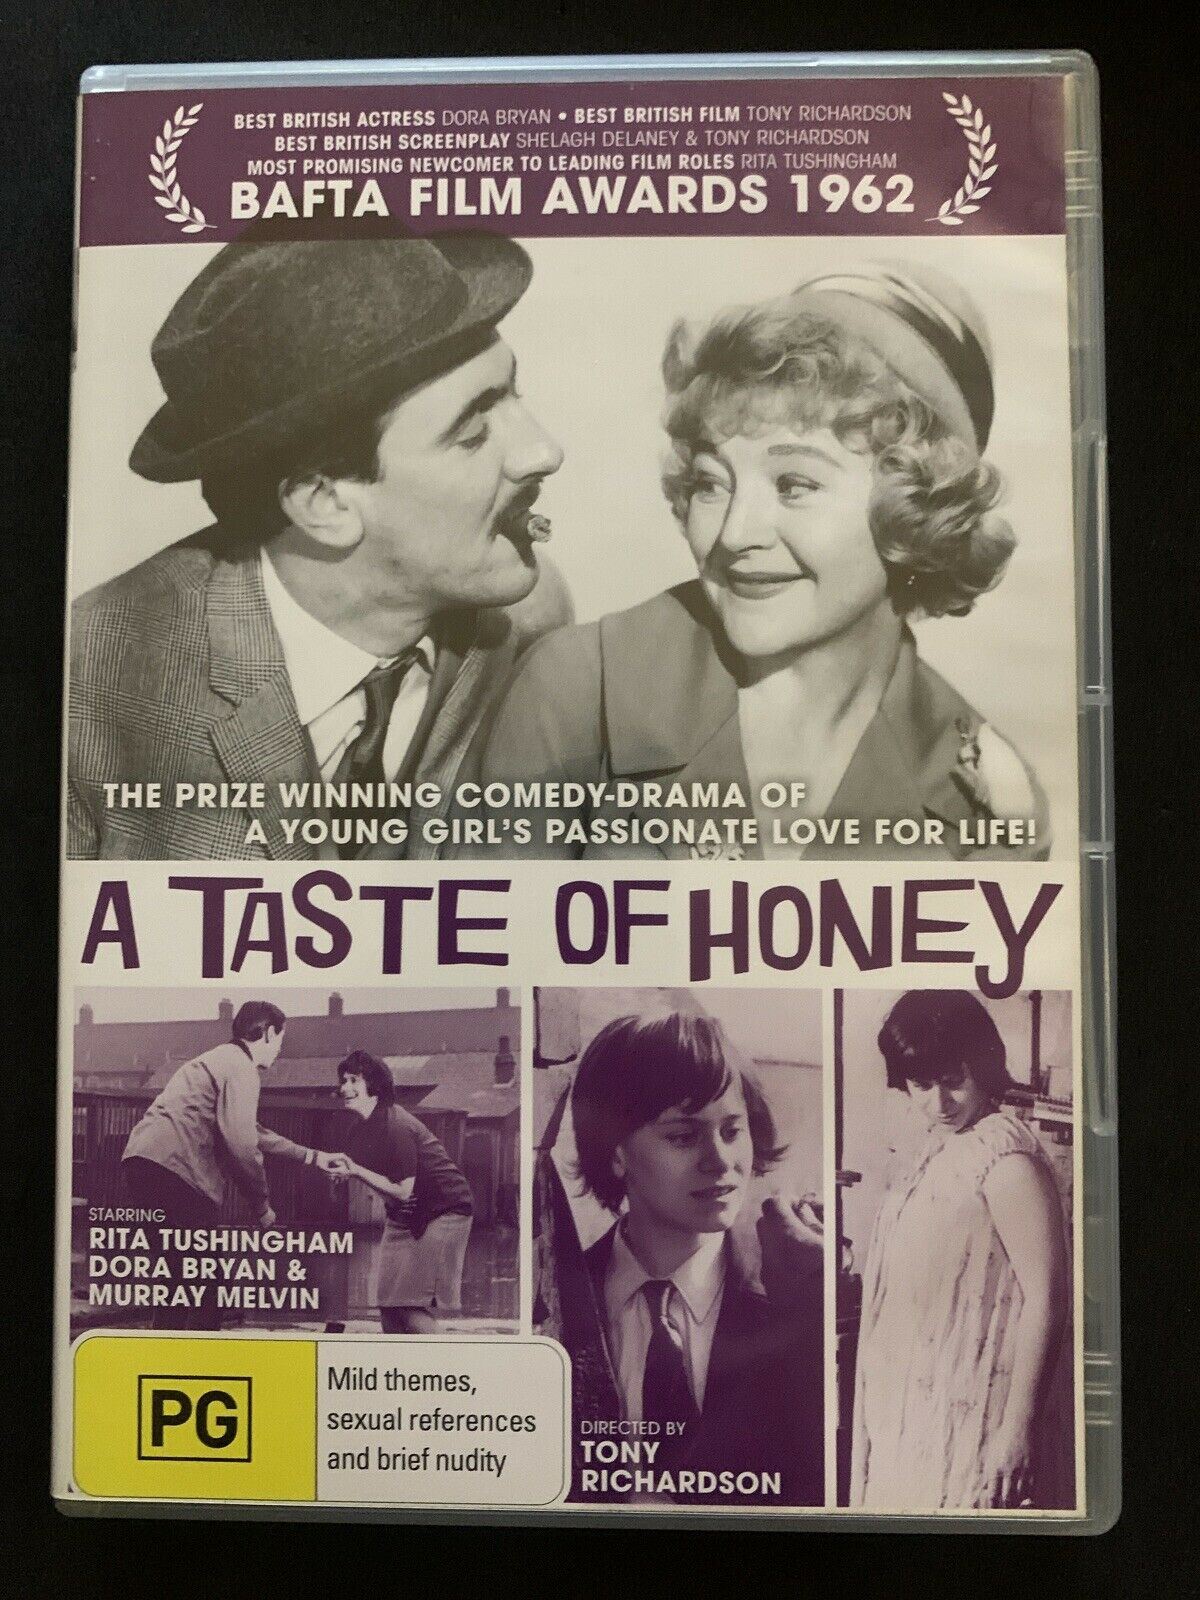 A Taste Of Honey (DVD, 1961) Rita Tushingham, Dora Bryan - All Regions